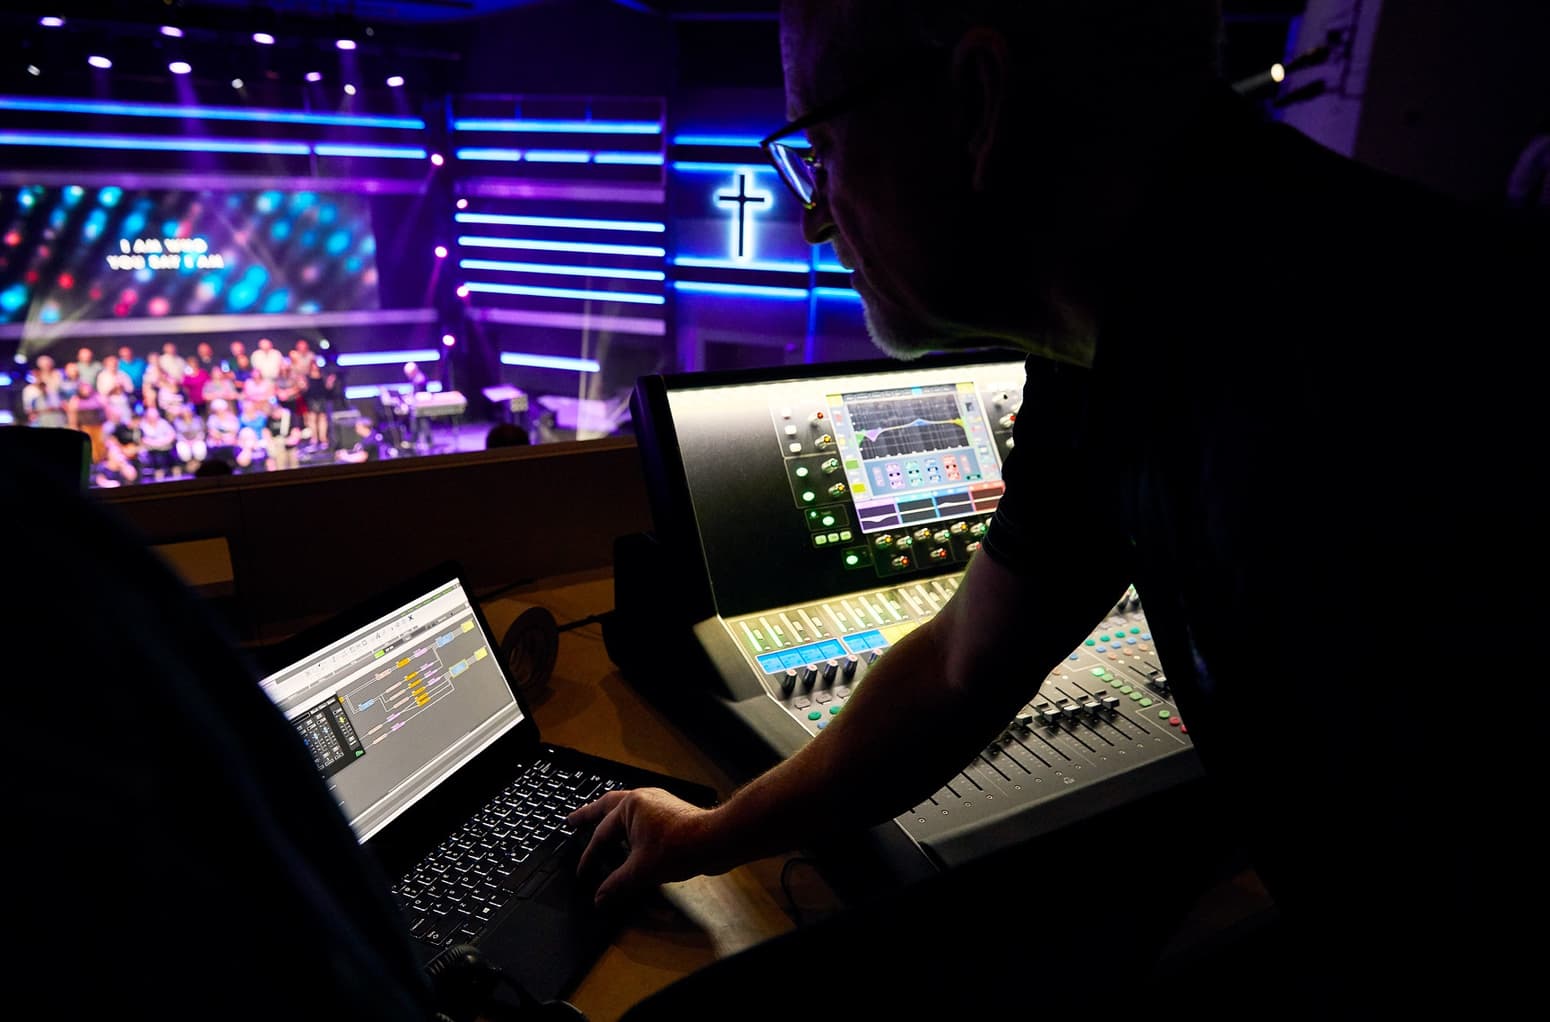 Audio design expert uses sound design system management software during church.